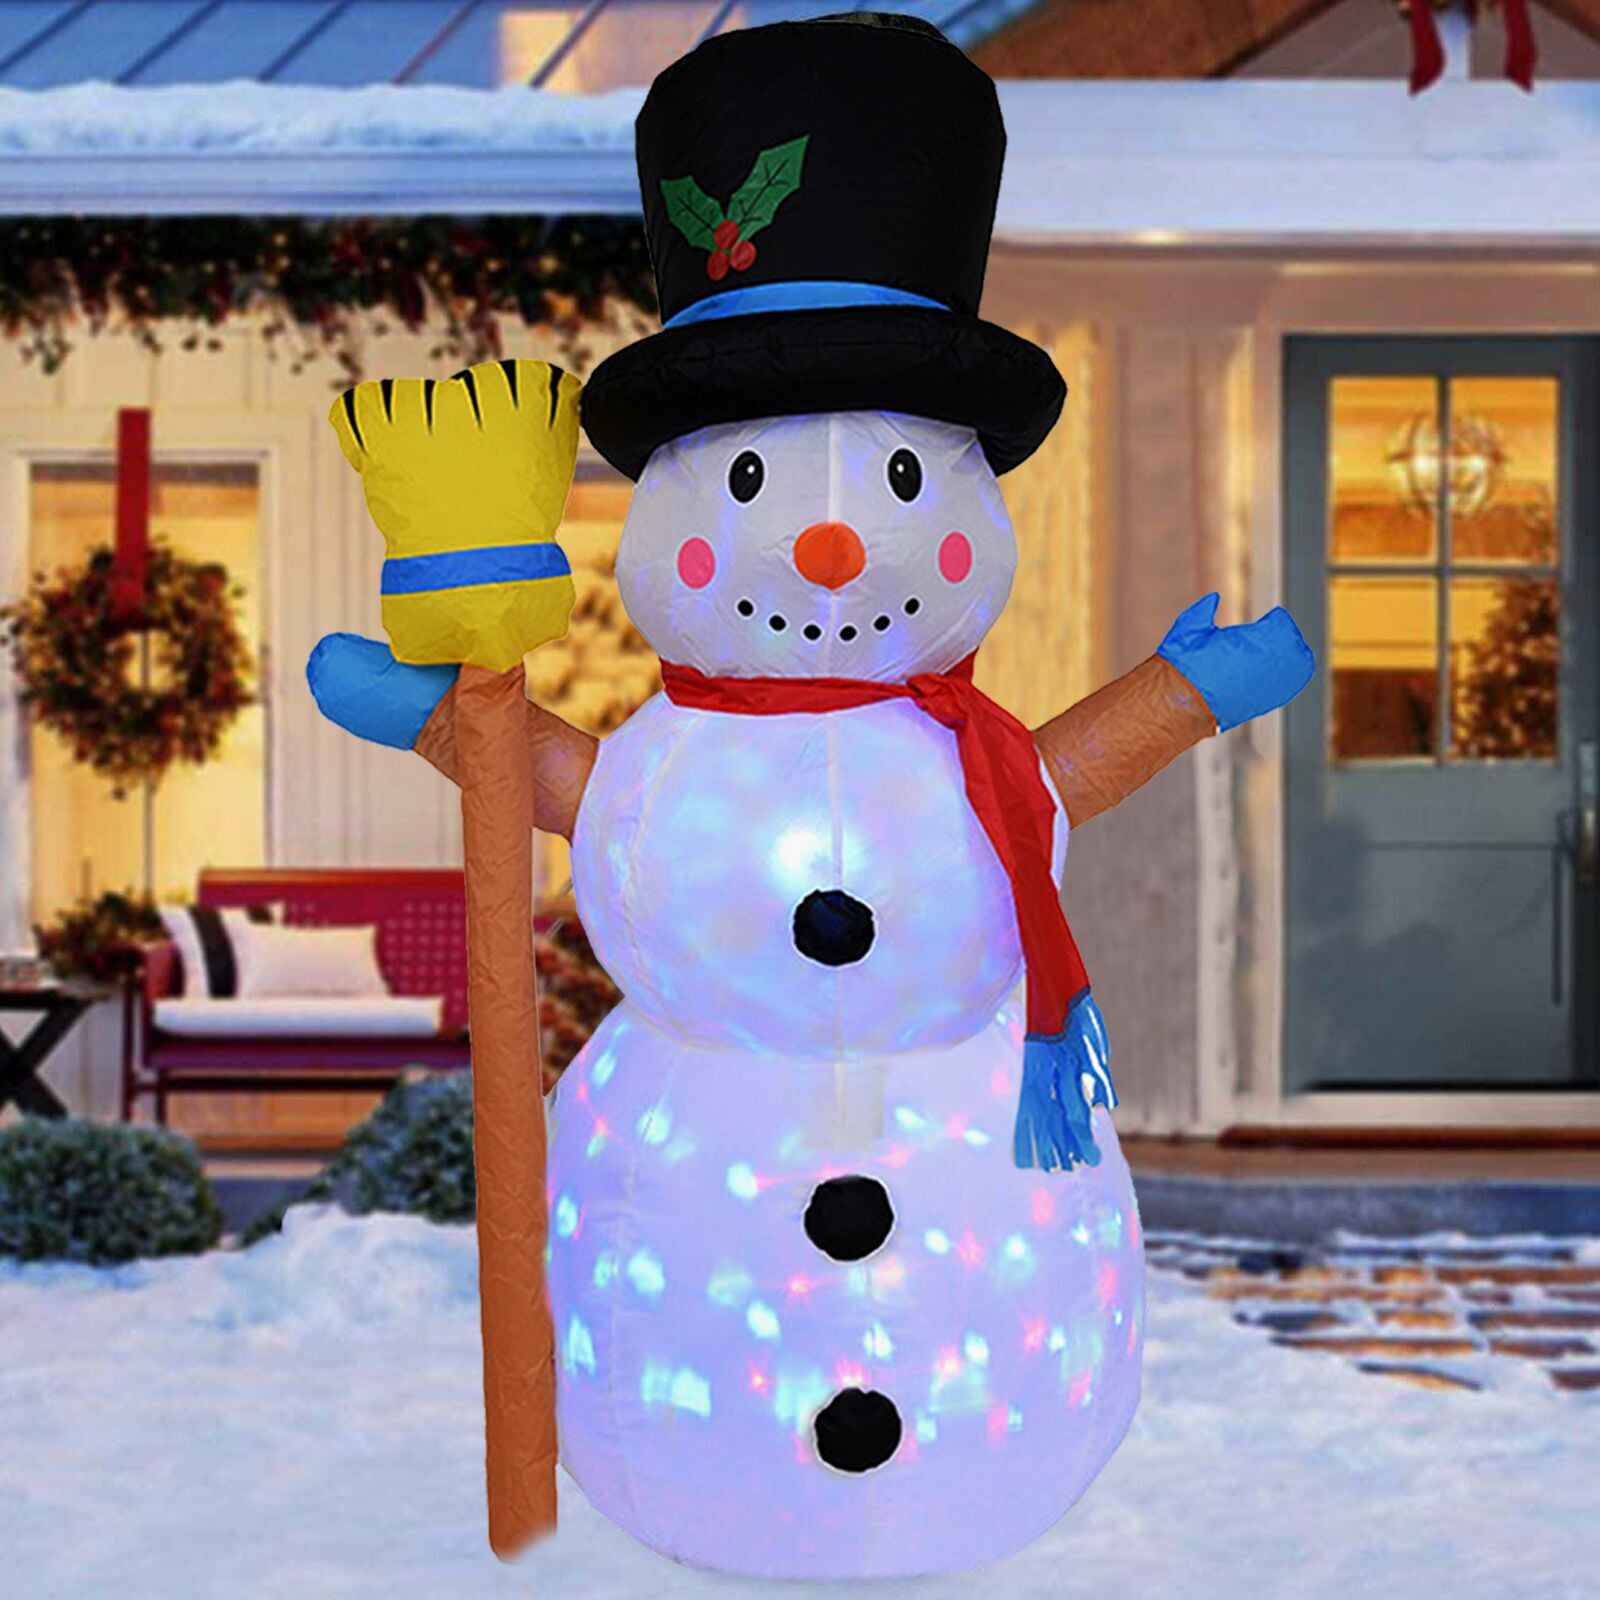 Walmart Christmas Decorations Tour 2020 - Xmas New Year Mini Artificial ...